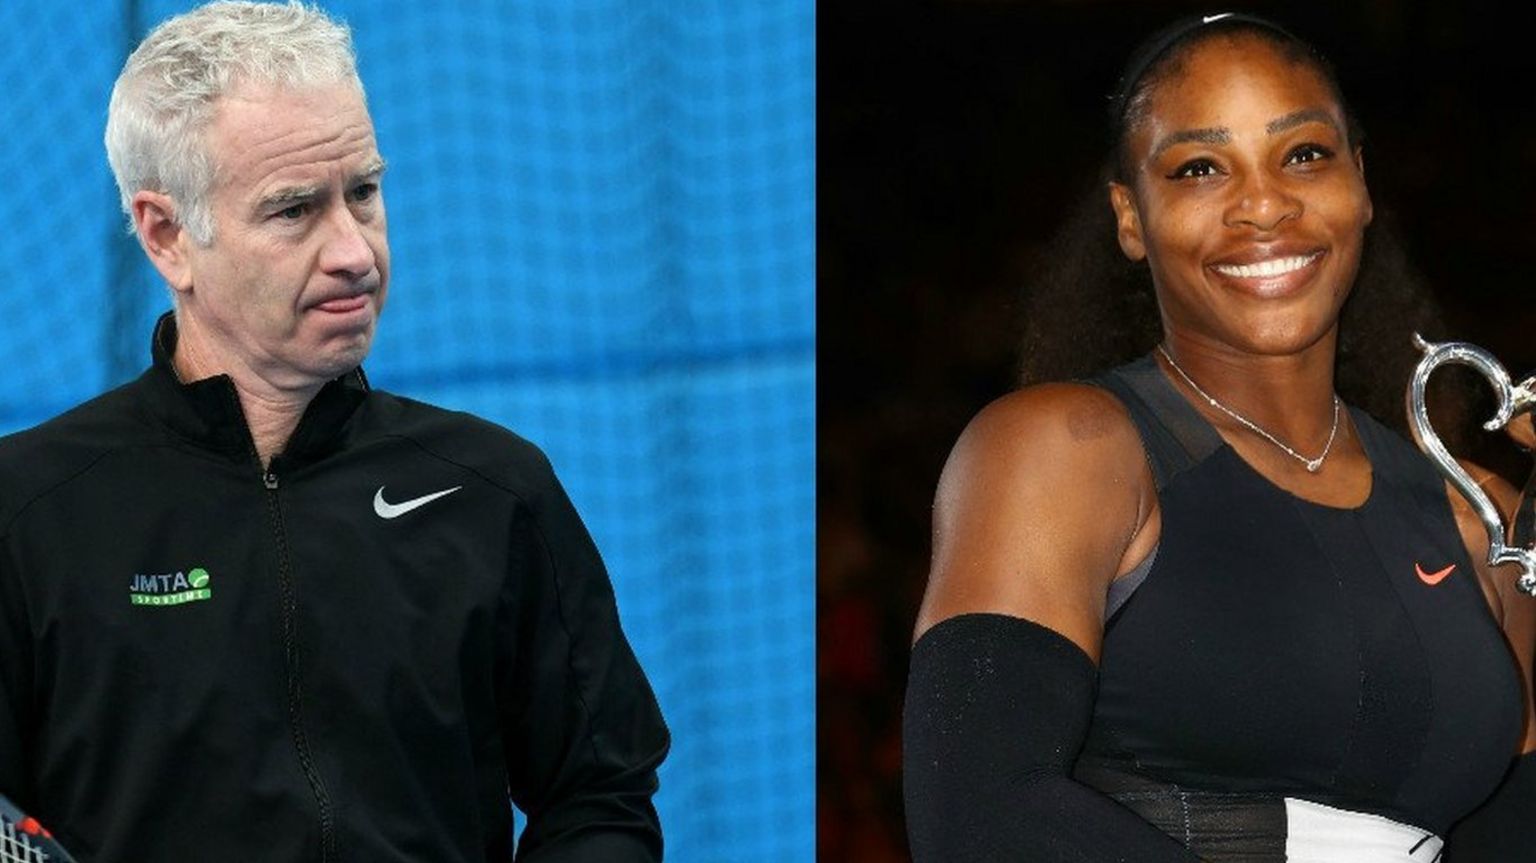 John McEnroe and Serena Williams